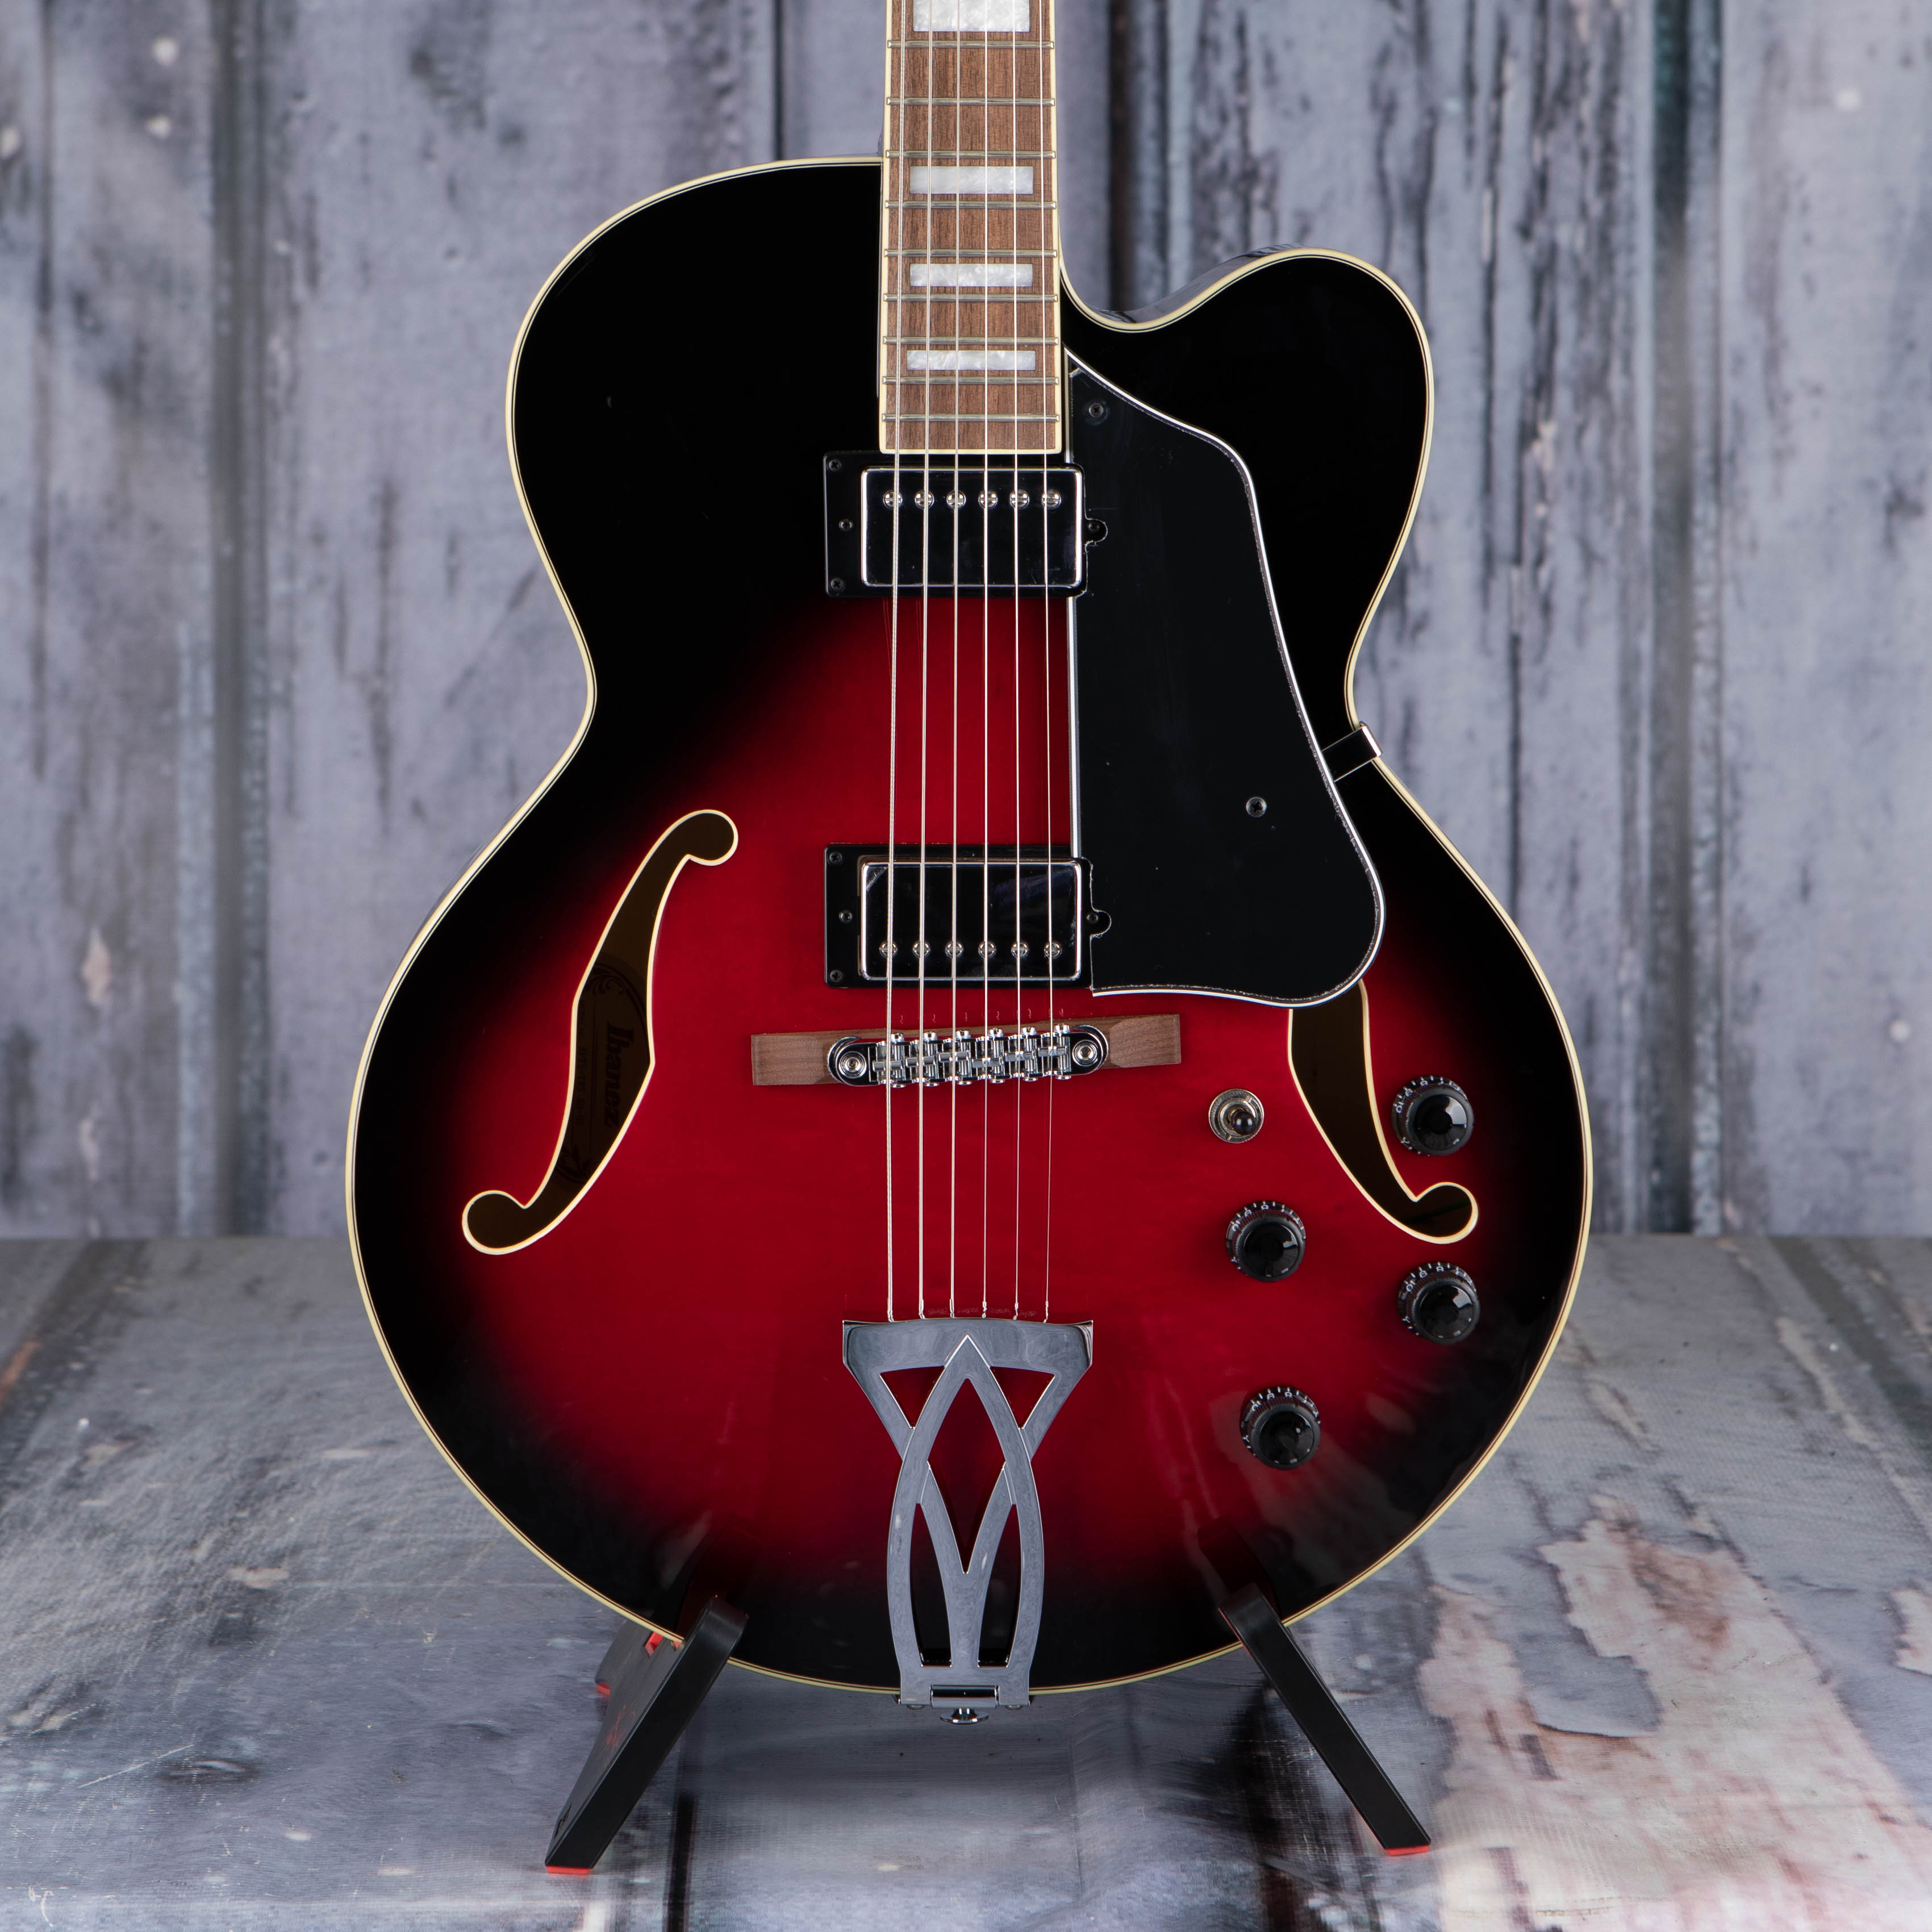 Ibanez Artcore AF75 Hollowbody Guitar, Transparent Red Sunburst, front closeup